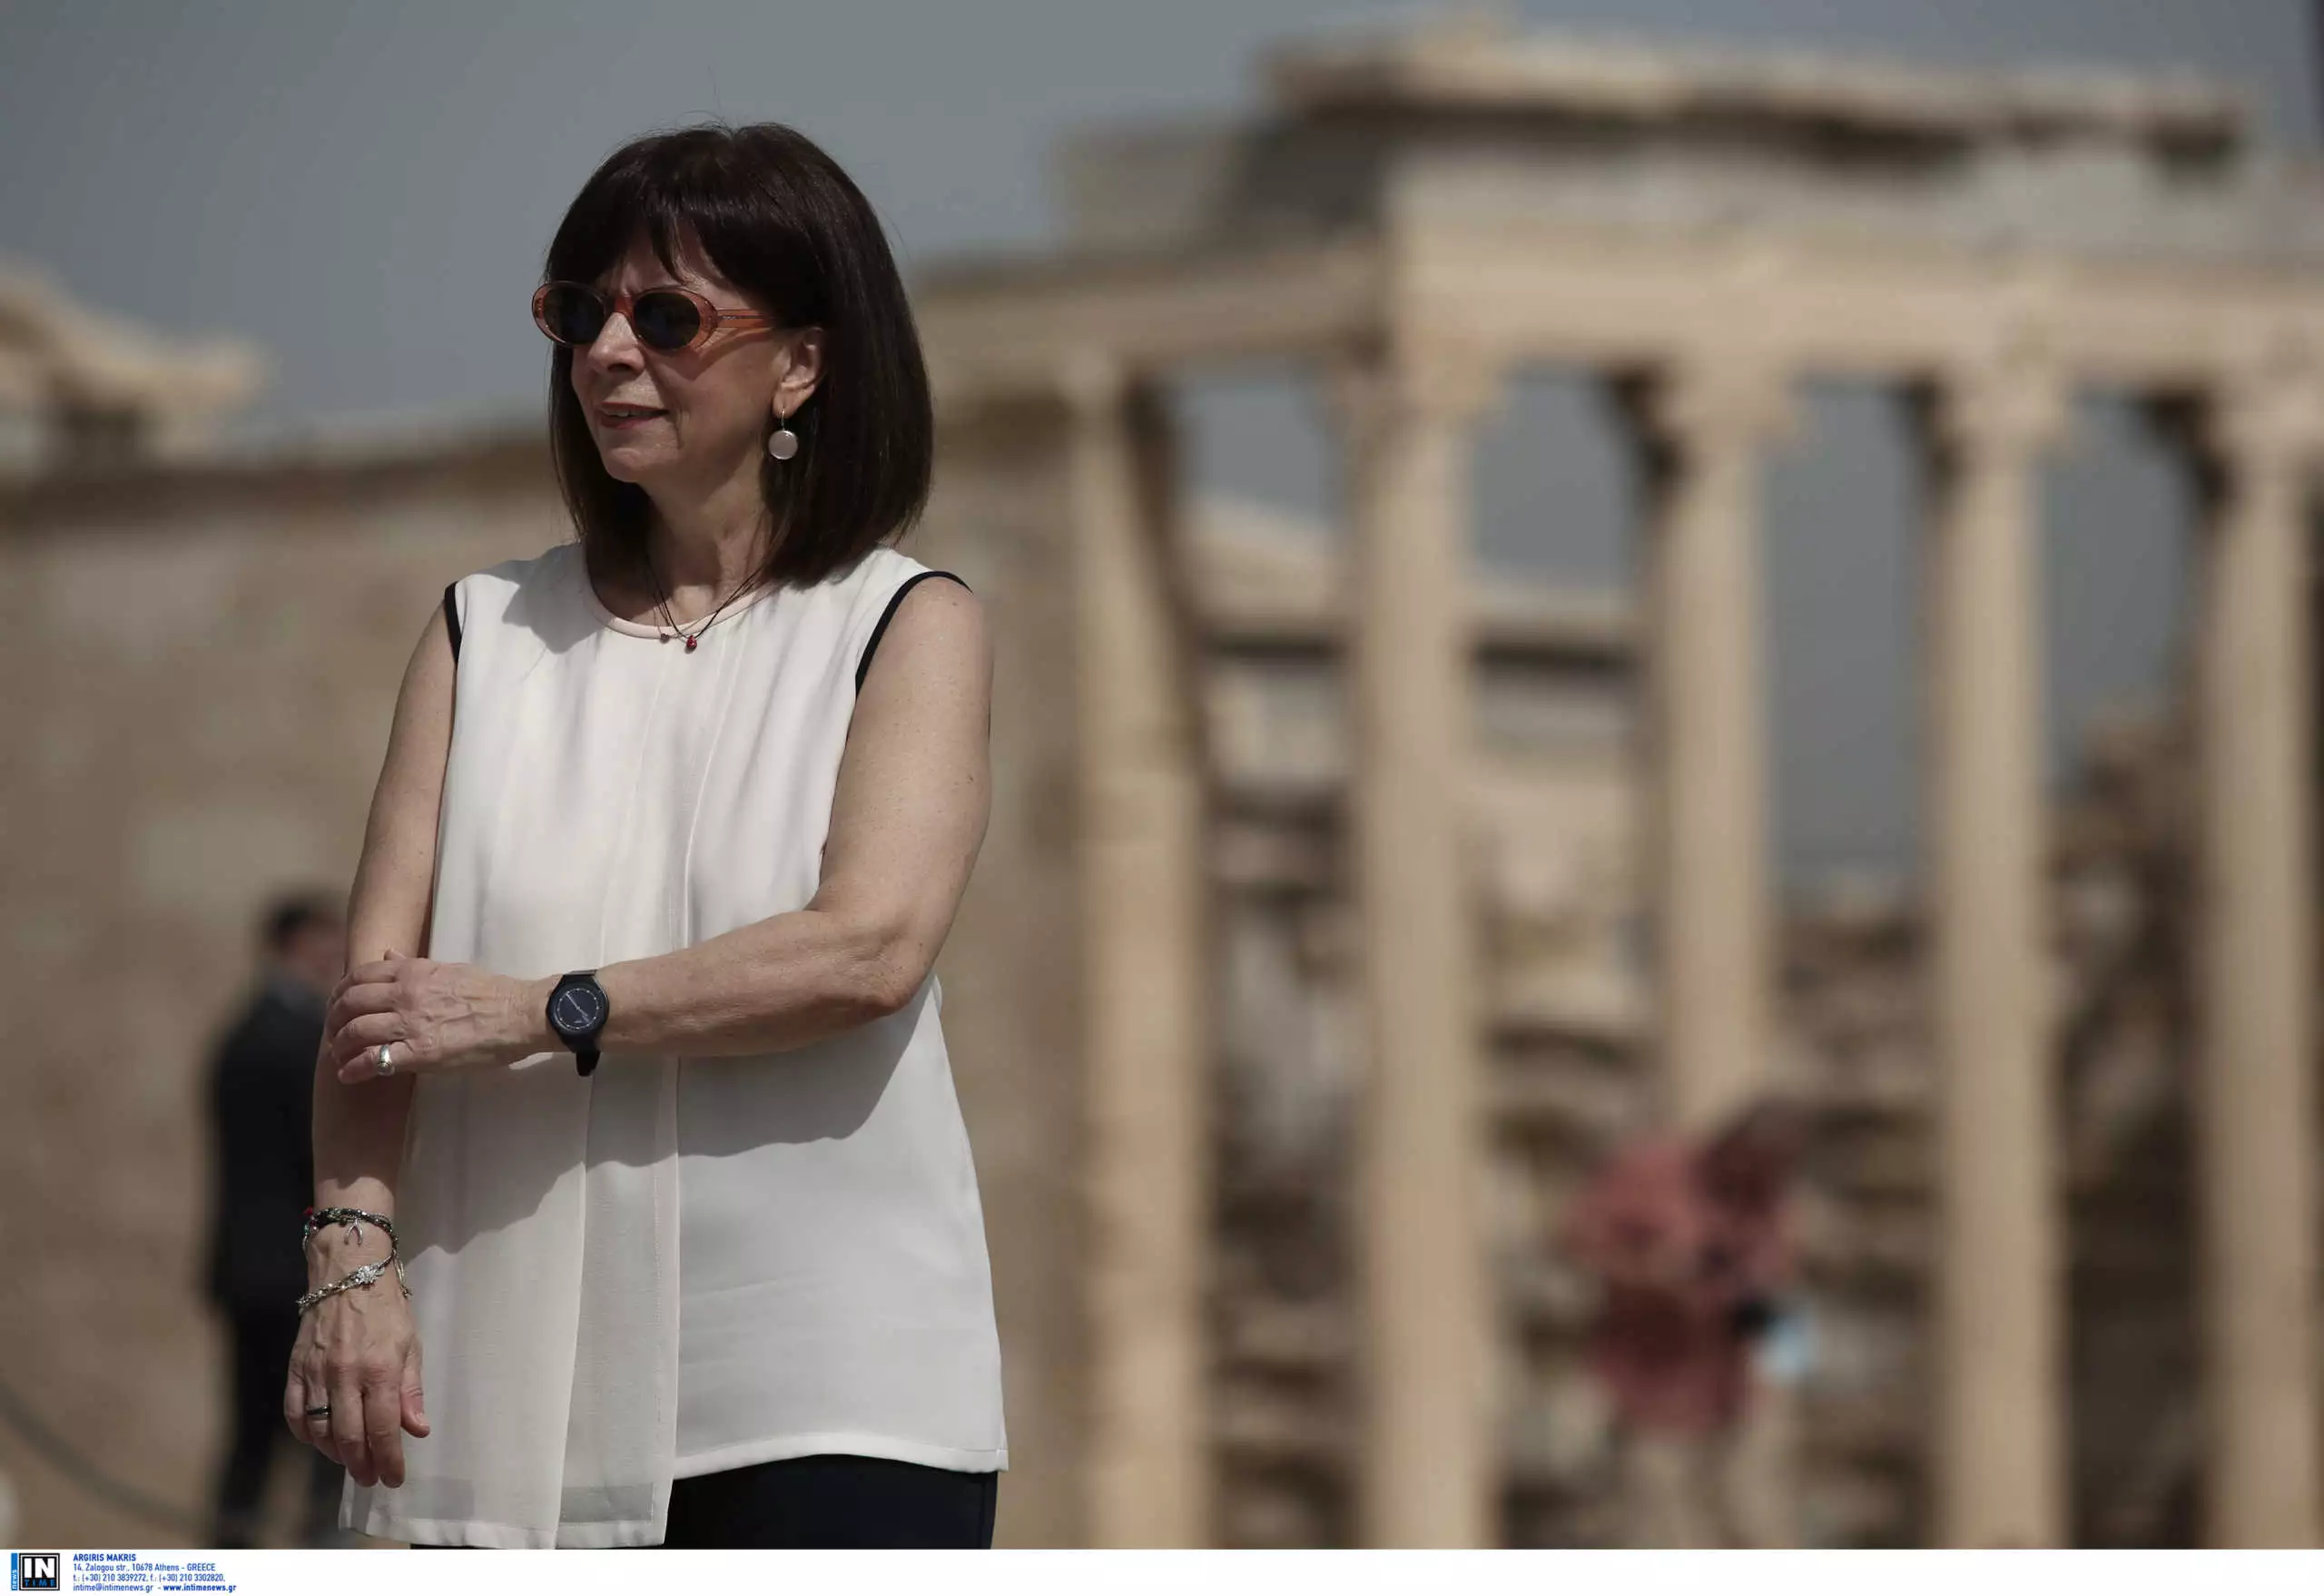 Greek President fighting for gender equality 